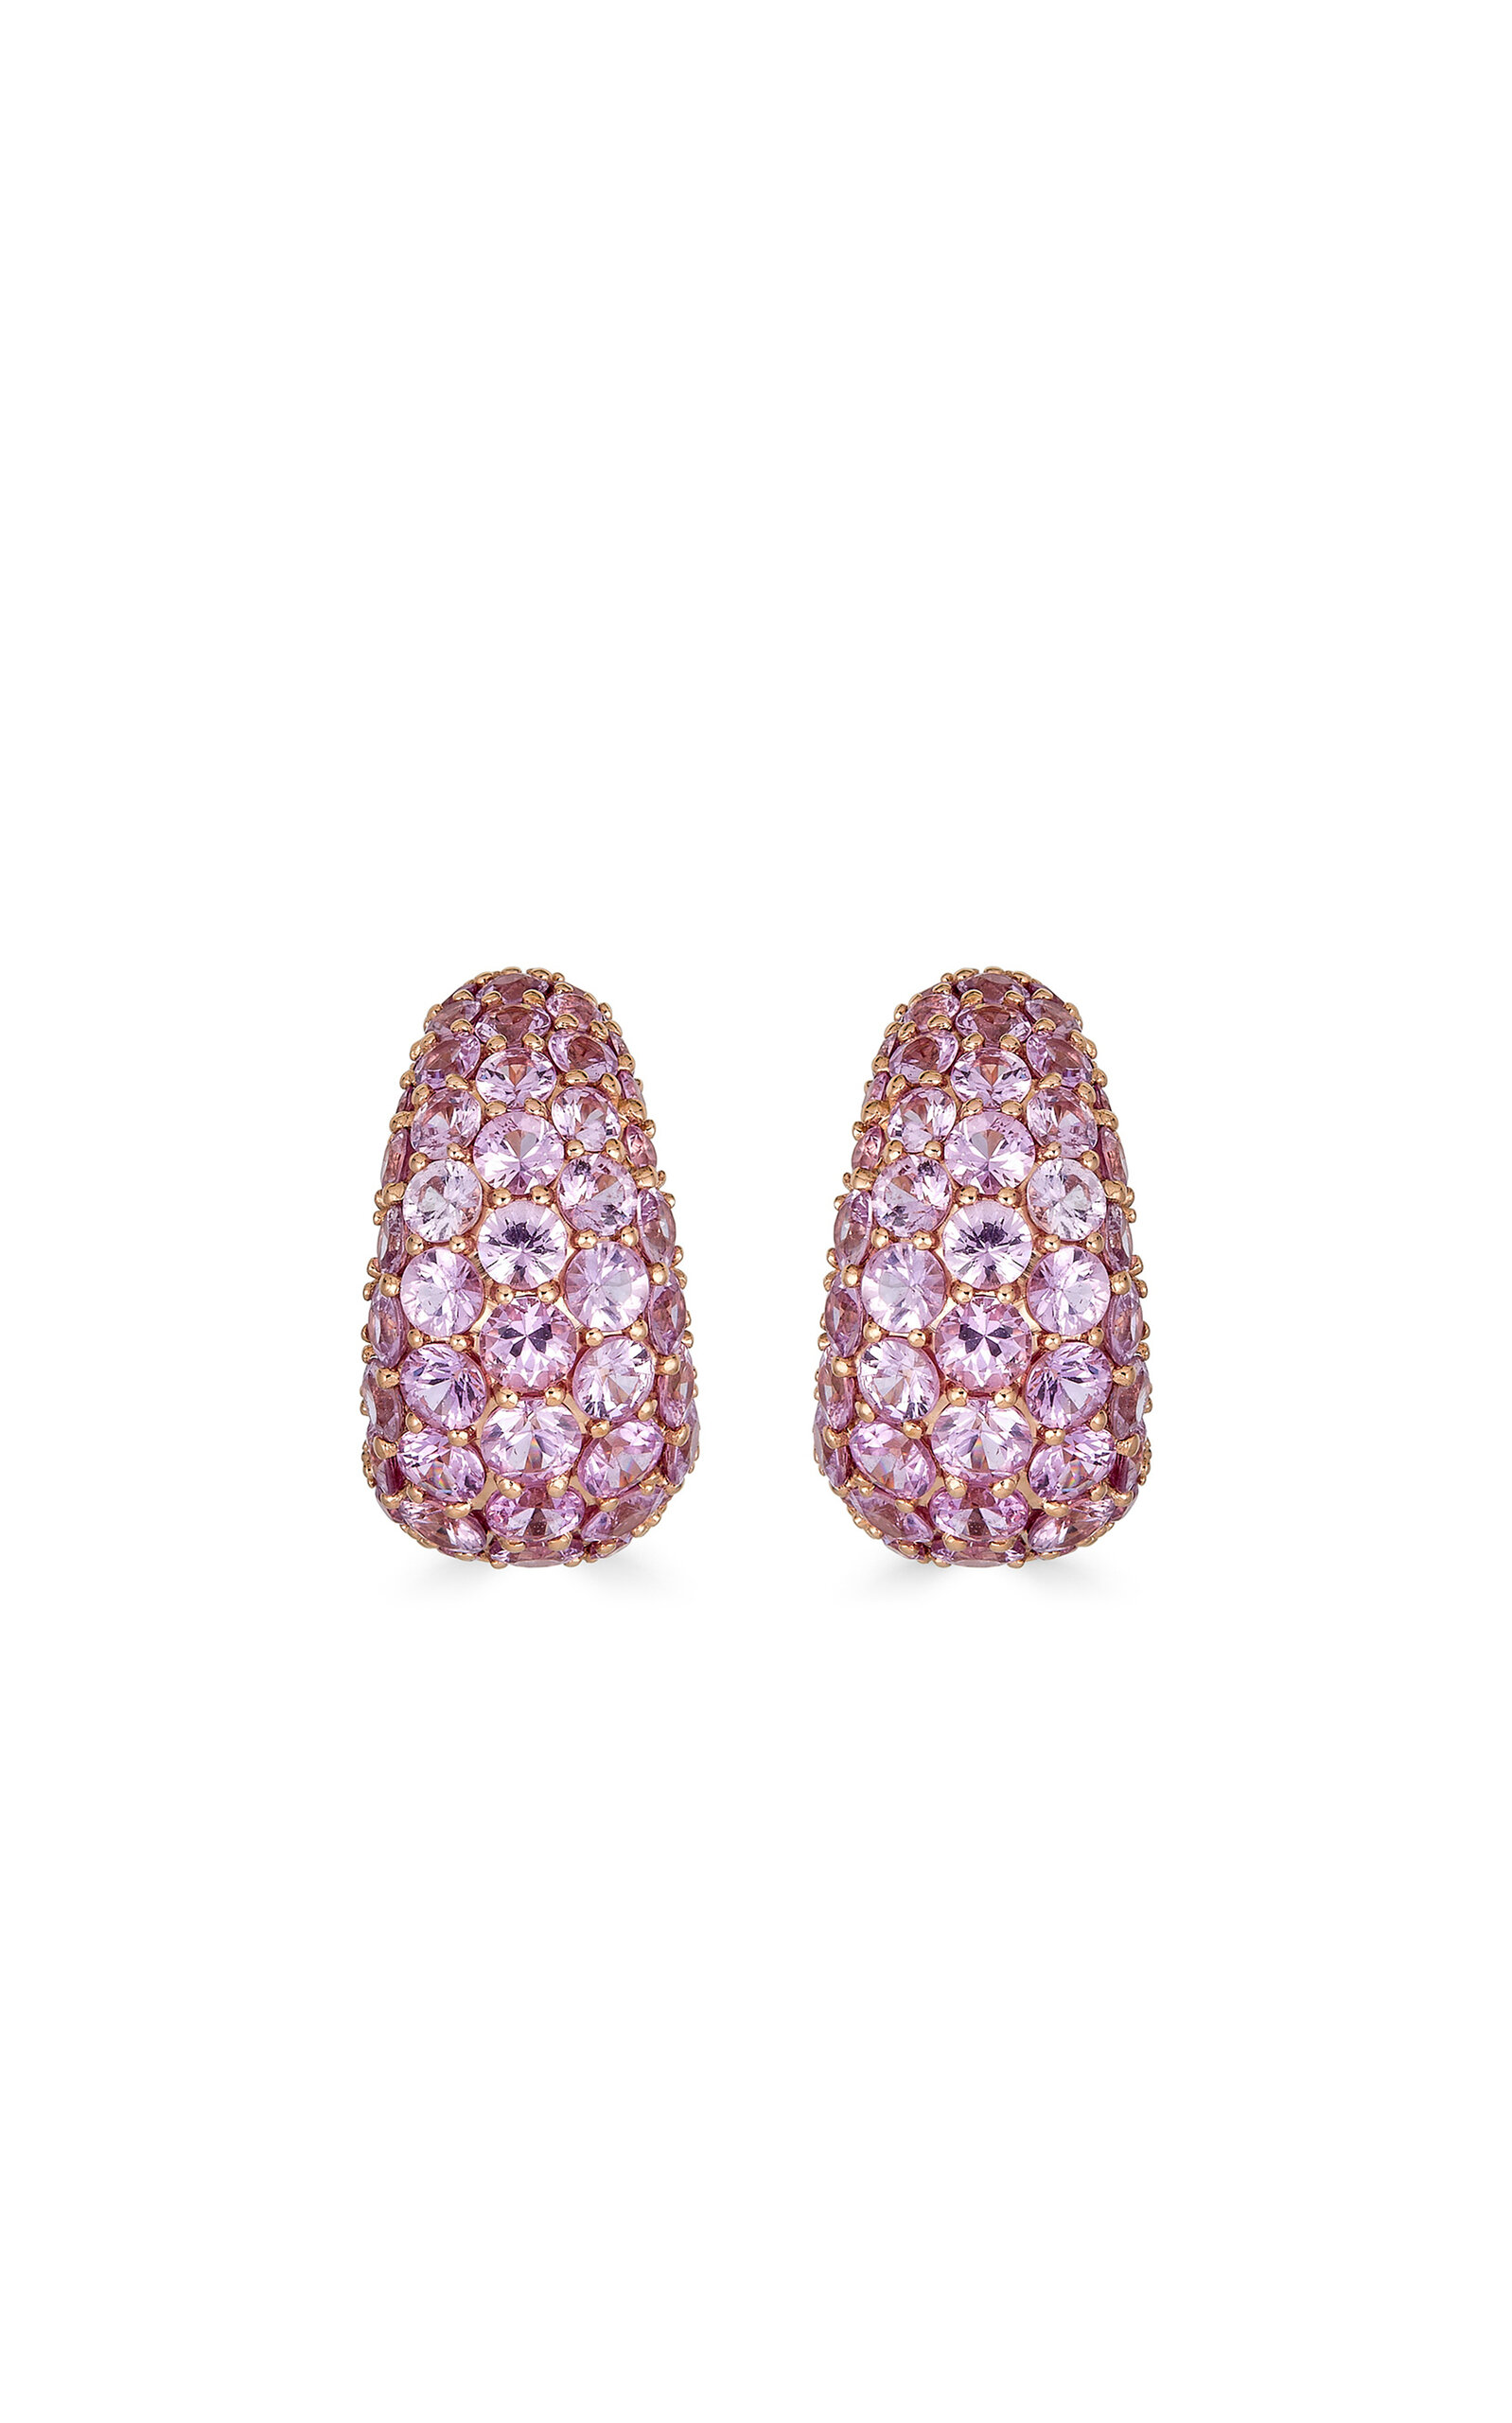 18K Rose Gold Pink Sapphire Earrings